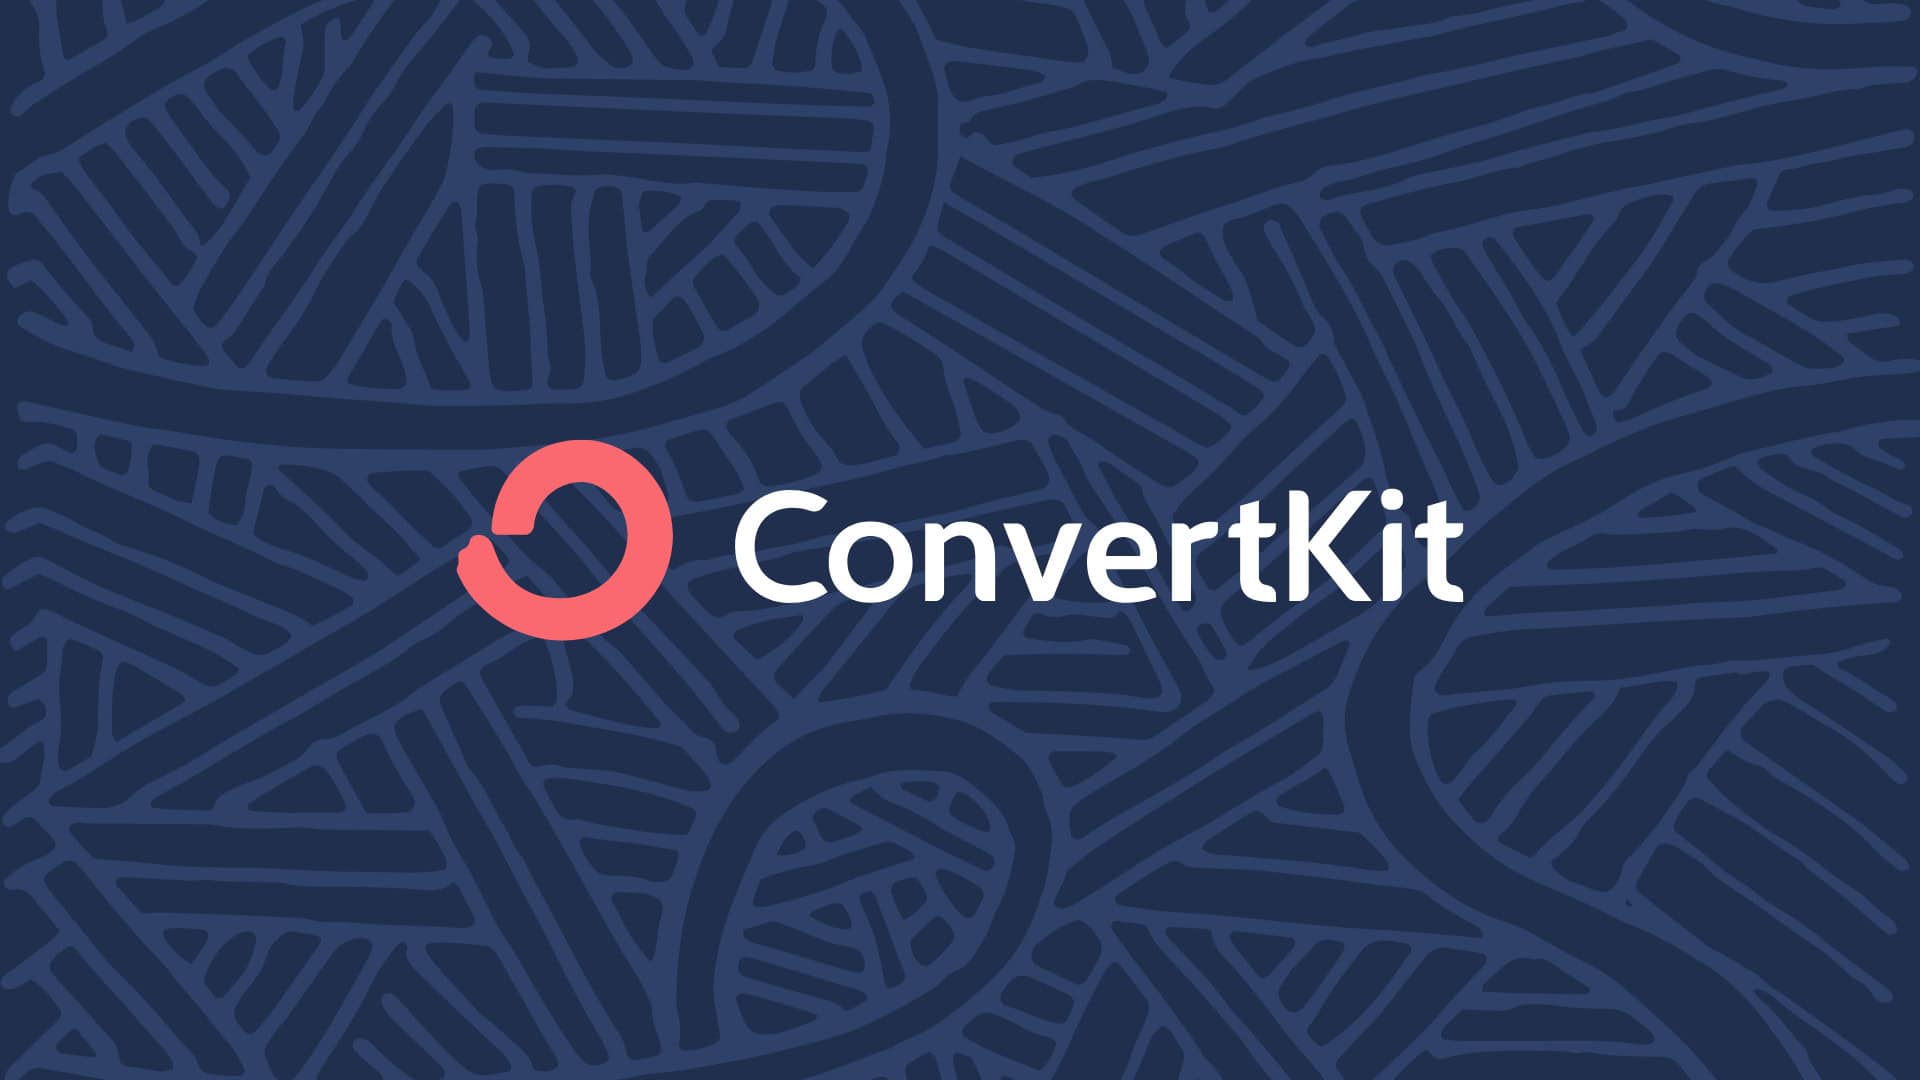 ConvertKit logo